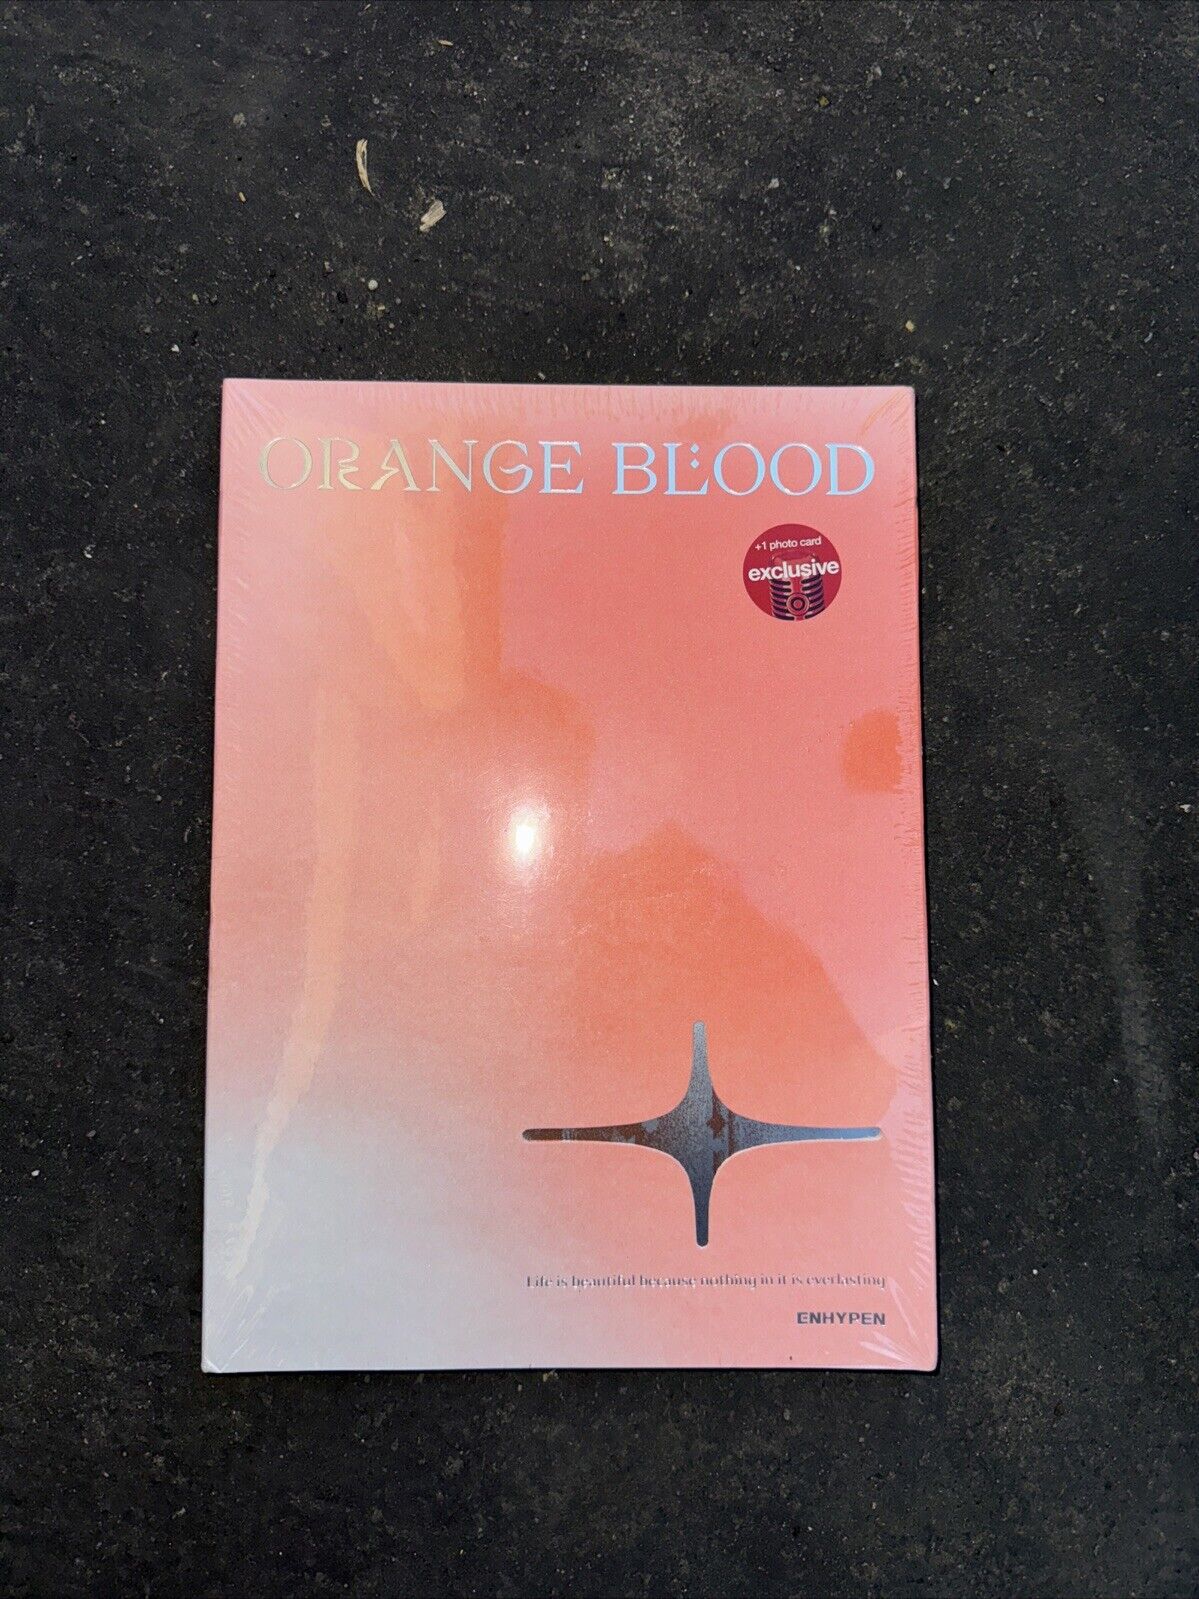 ENHYPEN - ORANGE BLOOD BRAND NEW (Target Exclusive) KSANA Version sealed